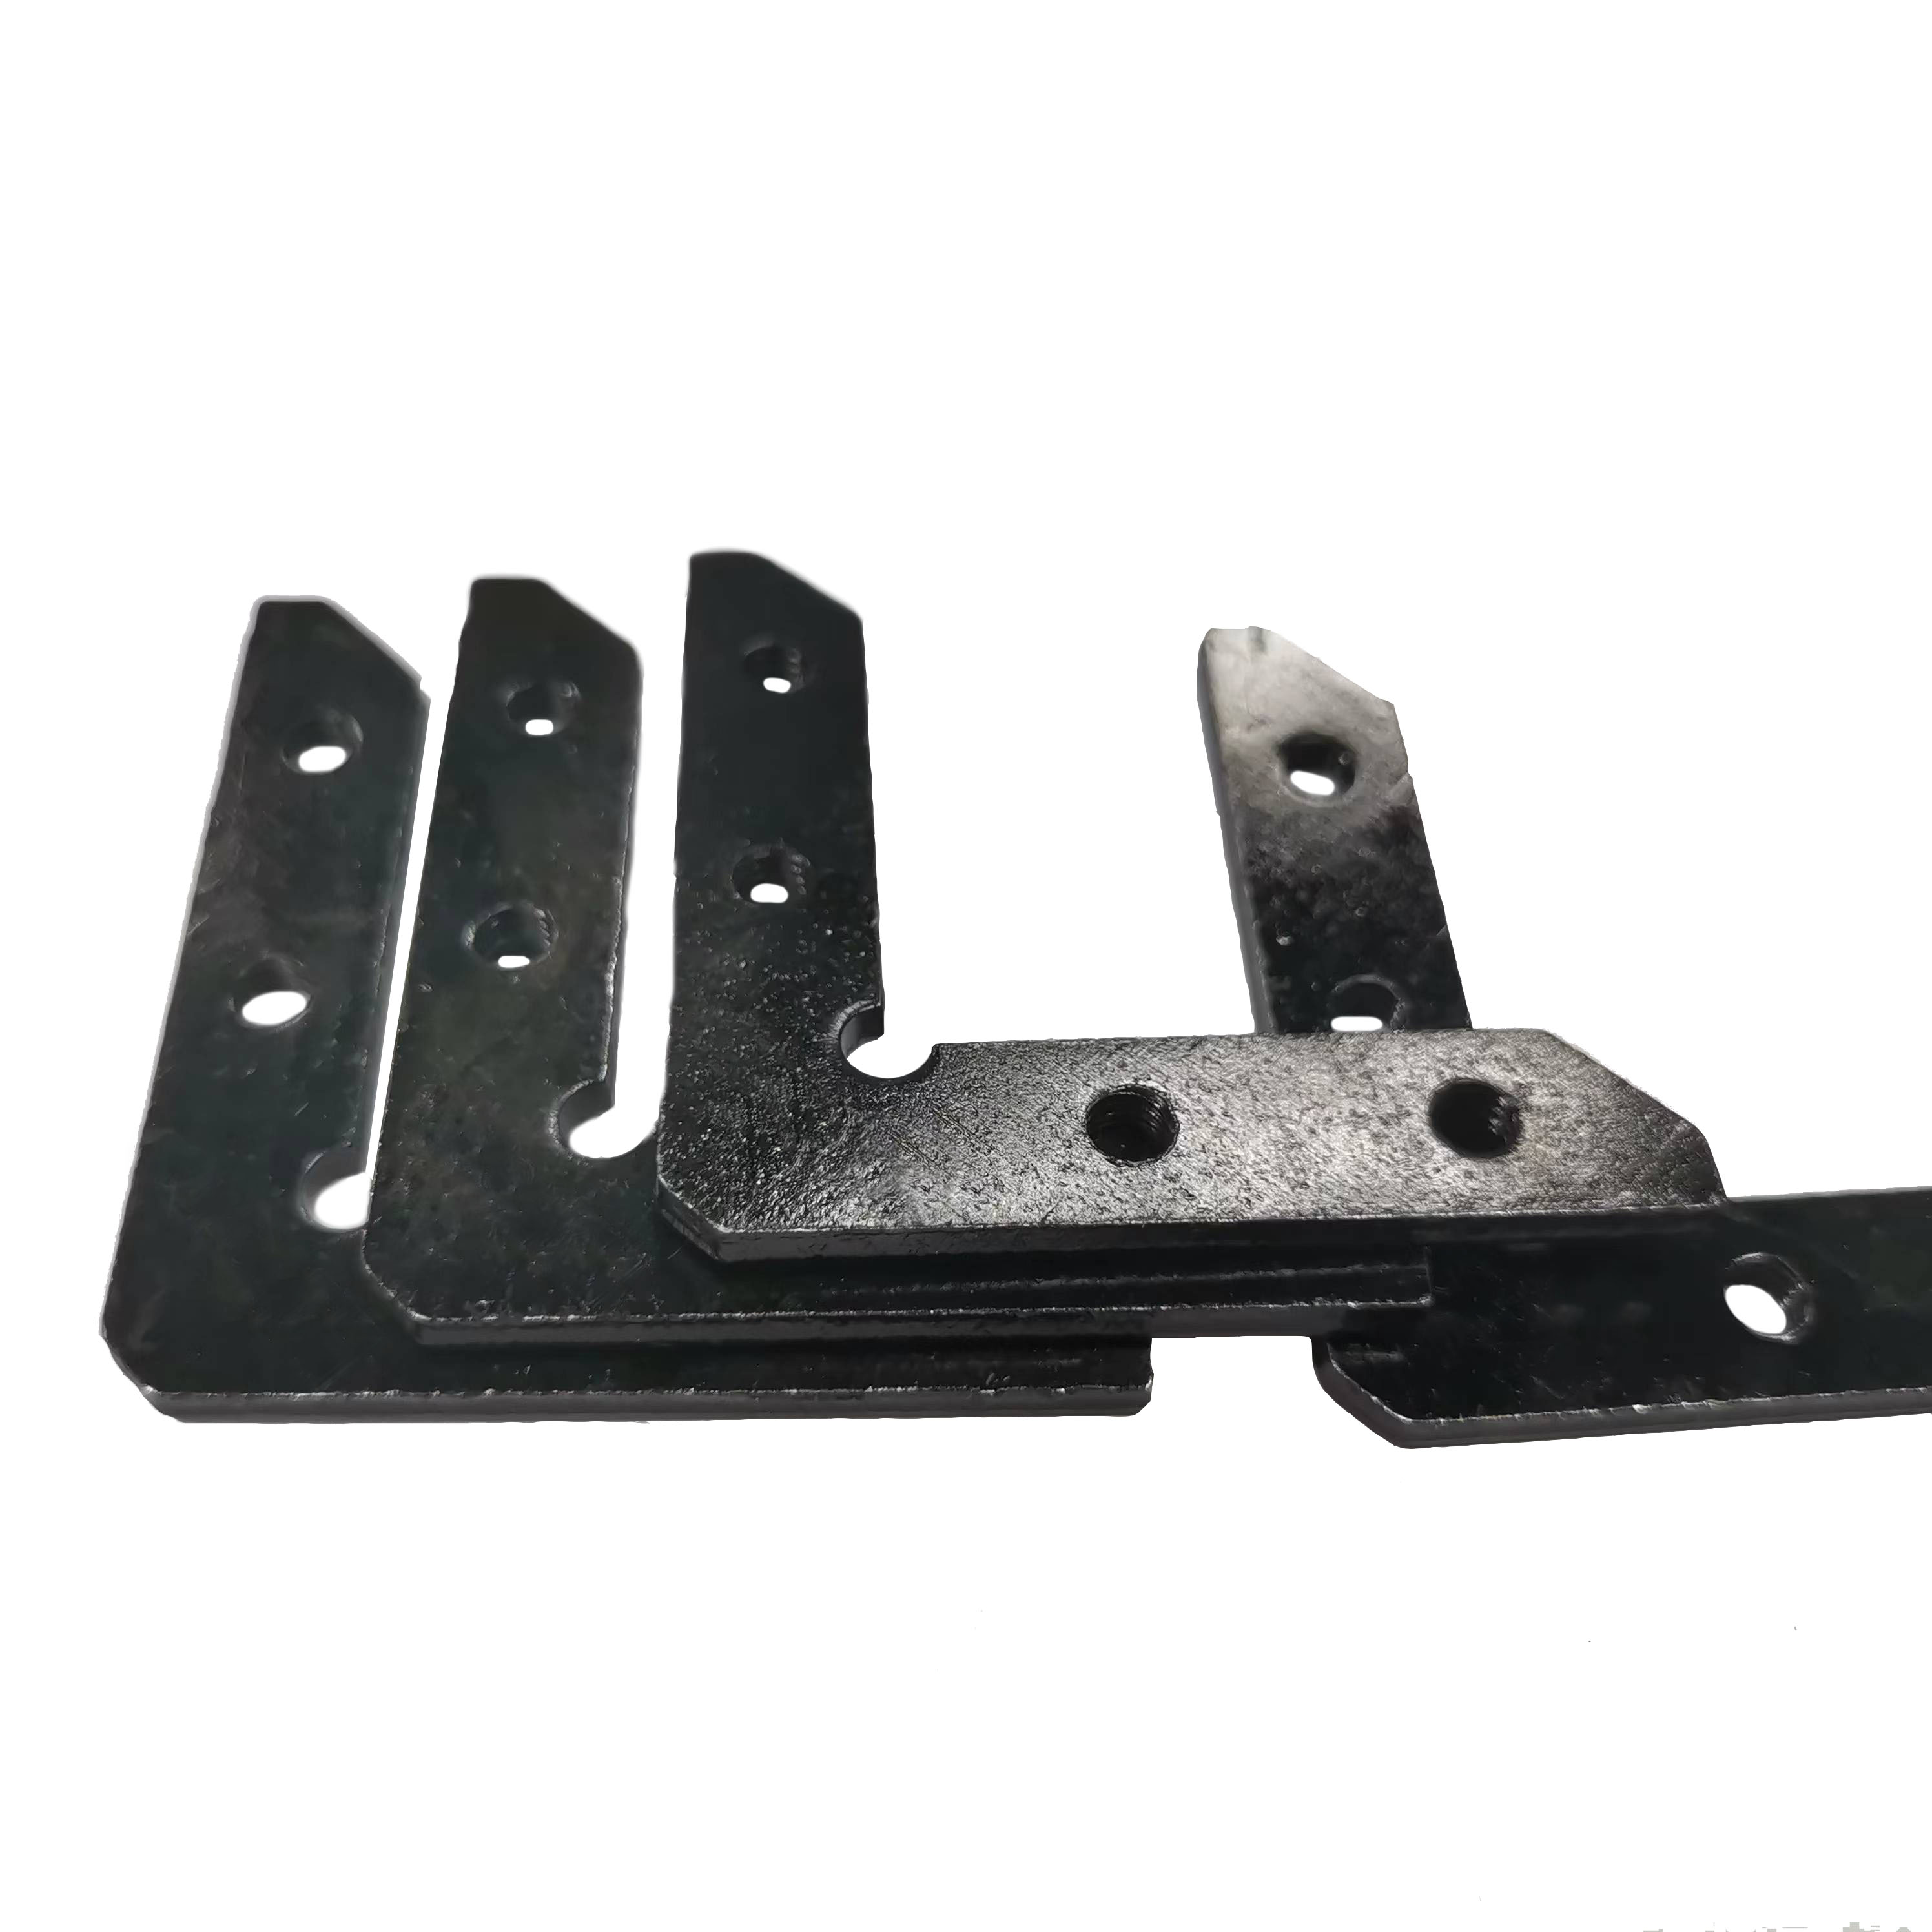 Black Door Frame Corner Code Photo Frame Assemble Accessories 4-hole L-shaped Bracket Repair Plat Carbon Steel Wood Connector